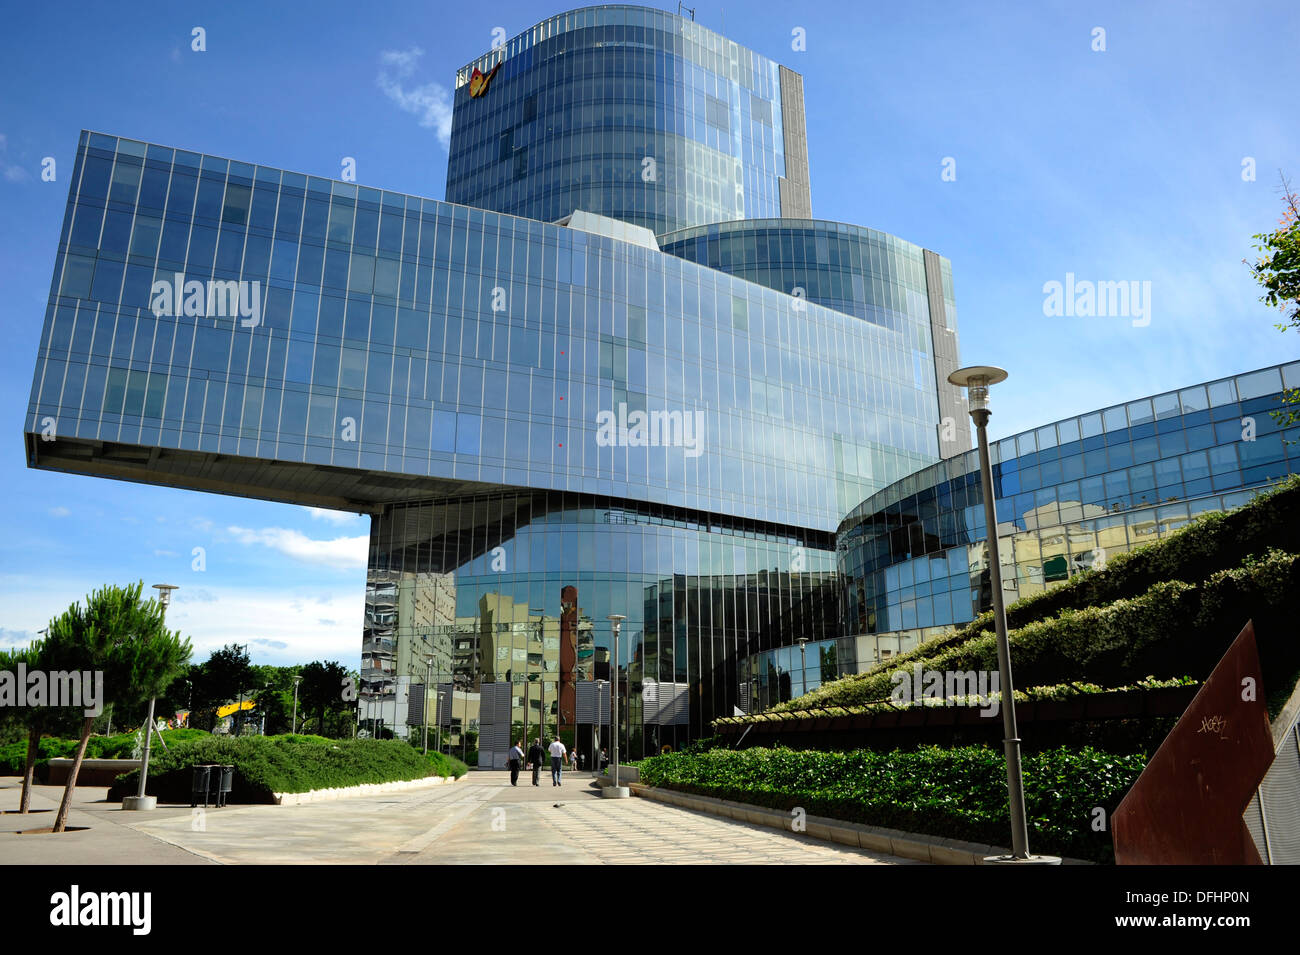 Edificio gas natural barcelona hi-res stock photography and images - Alamy